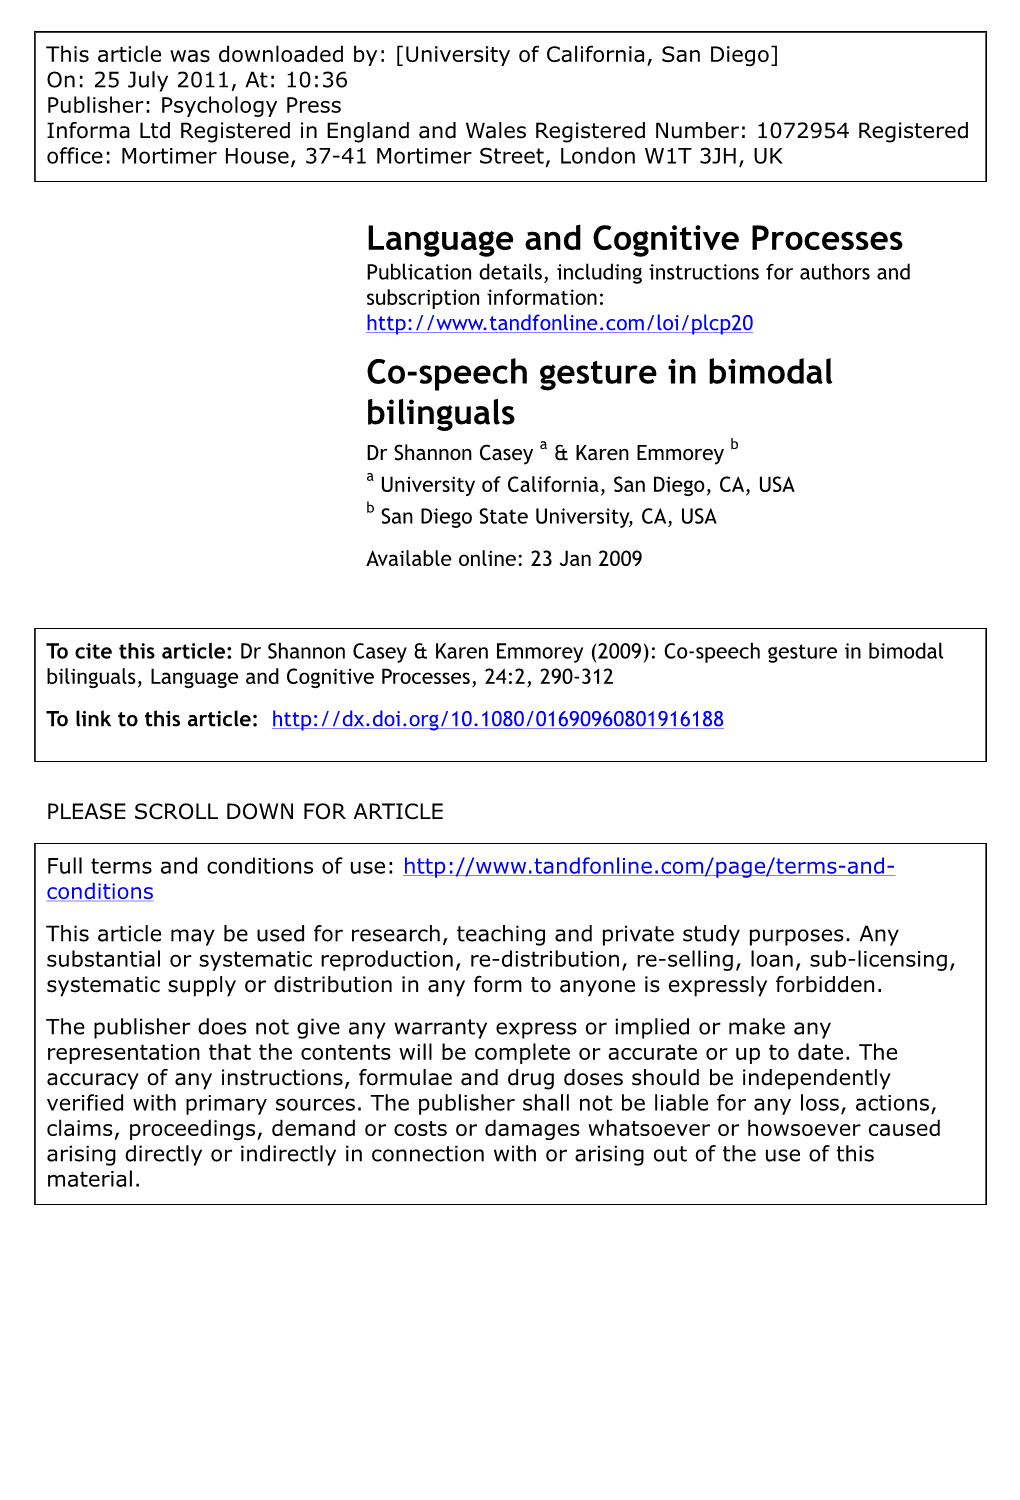 Co-Speech Gesture in Bimodal Bilinguals